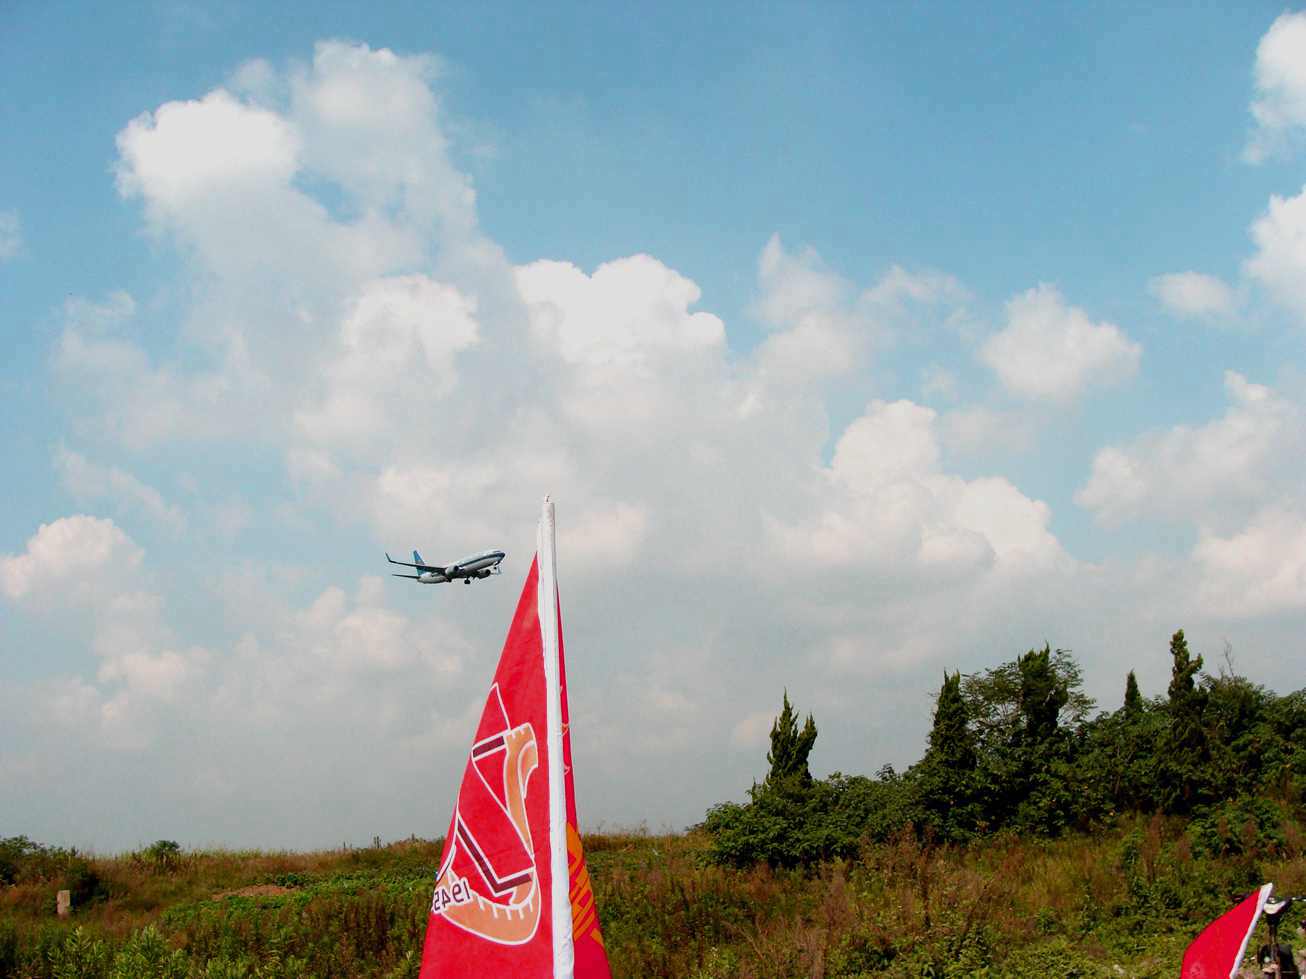 DSC07932飞机与红旗3.jpg